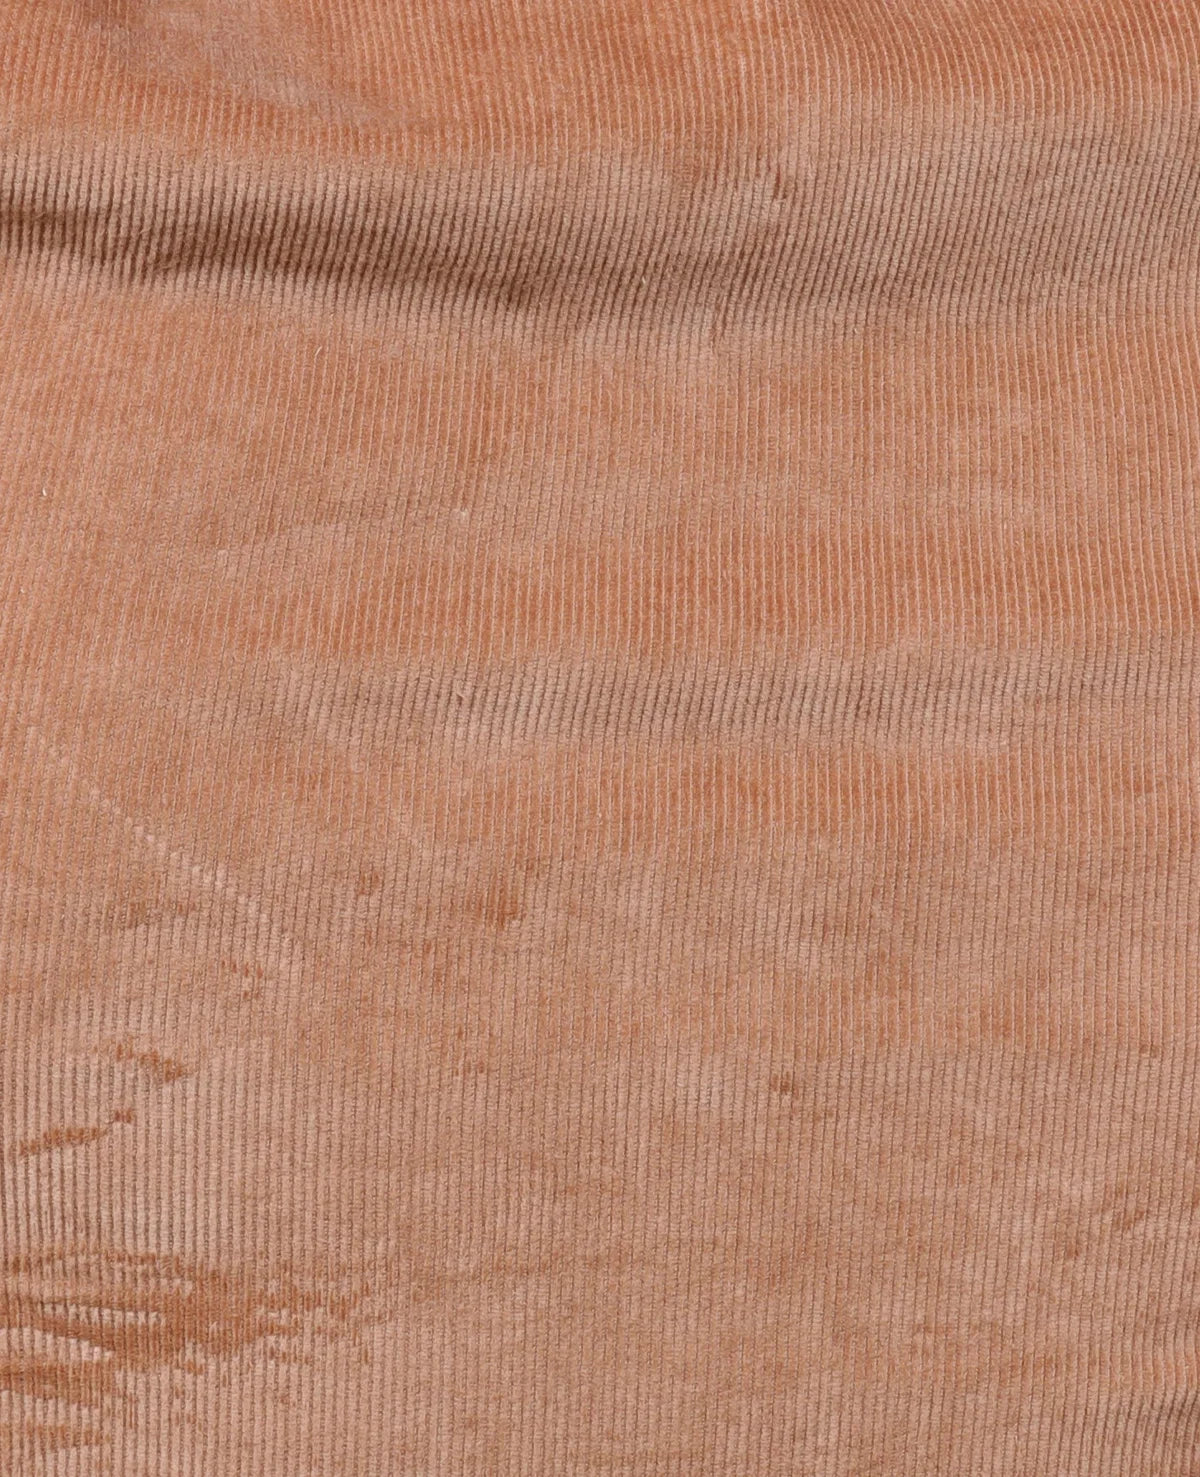 Earthy Pinkish Tan Corduroy Shacket for Effortless Layering